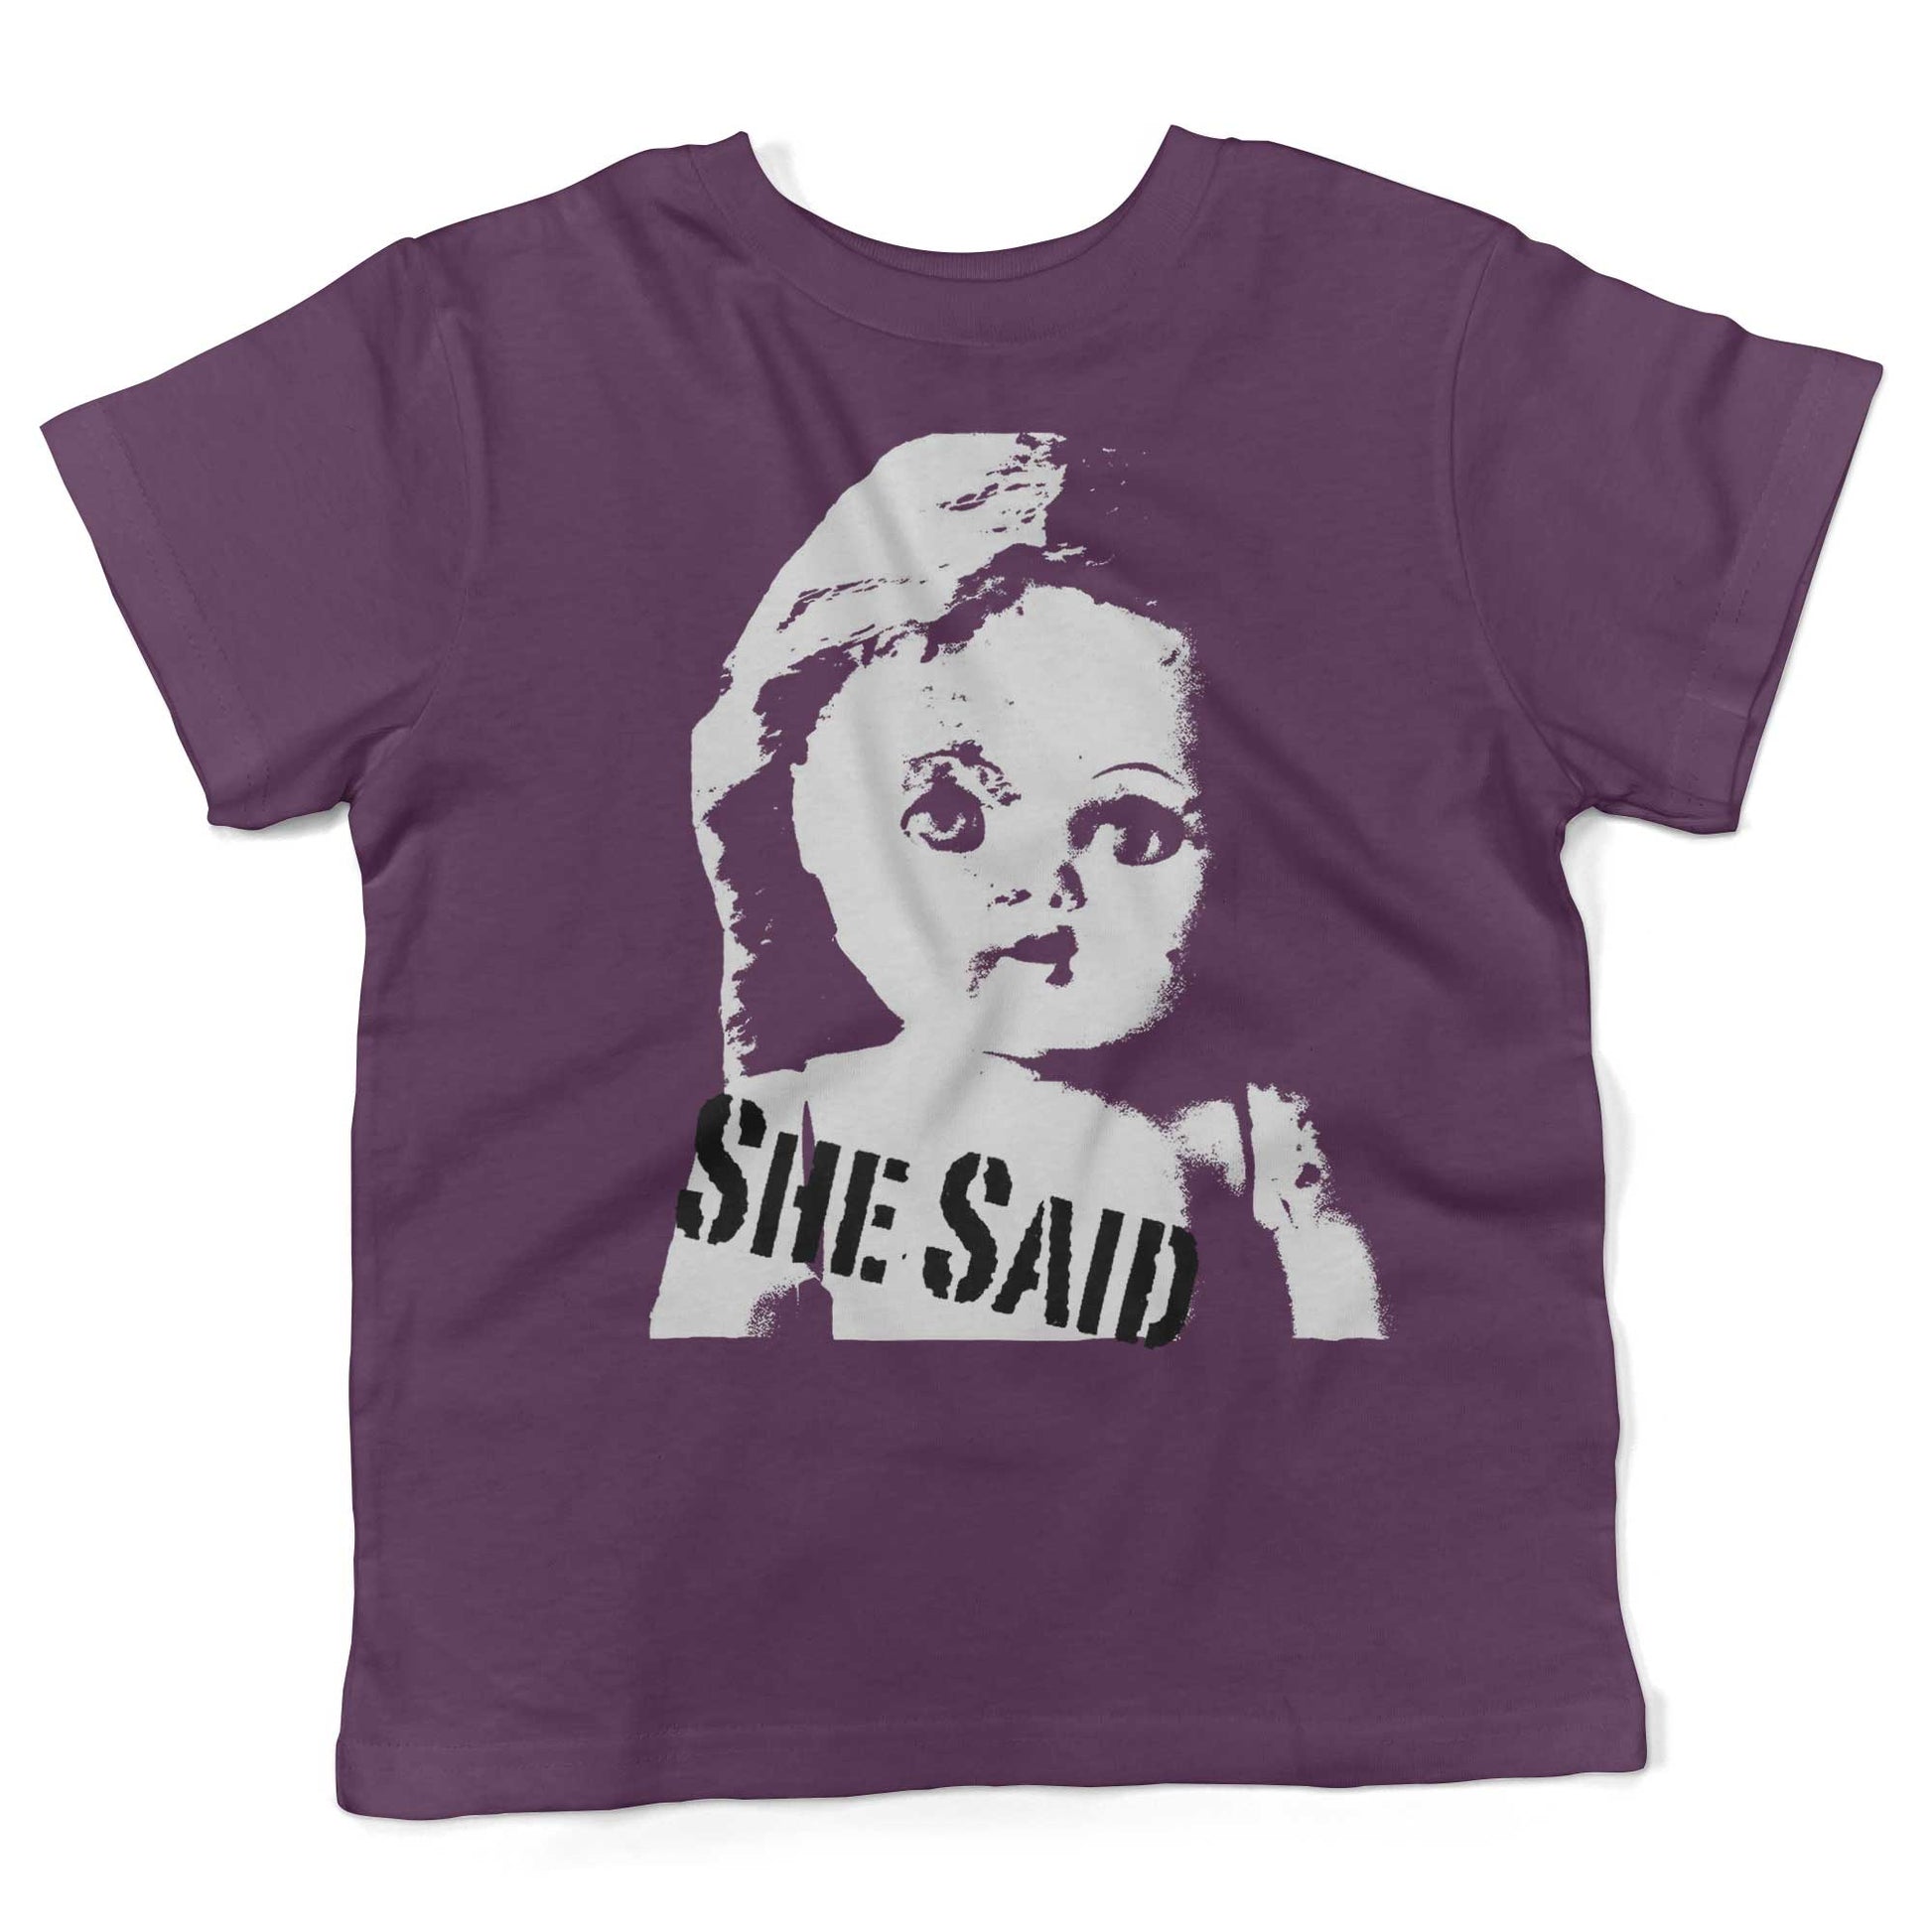 She Said Vintage Doll Head Toddler Shirt-Organic Purple-2T